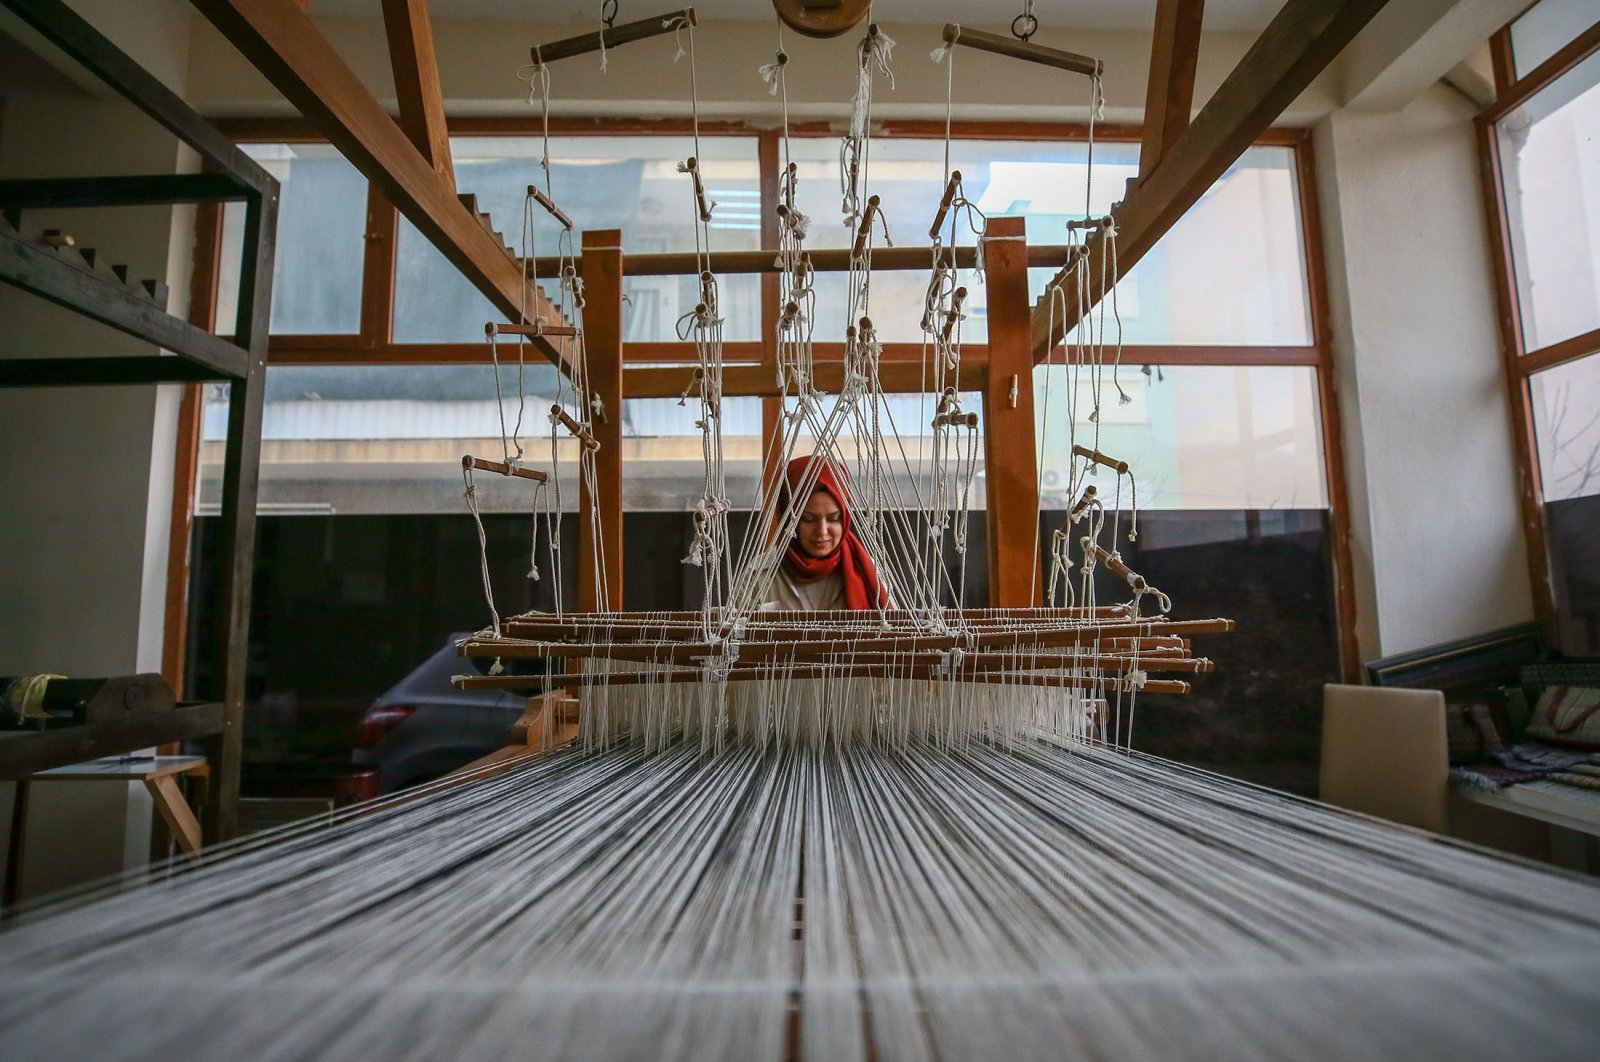 Nurefşan Yaykal keeps the traditional Beledi weaving method alive in her workshop, in Tire district of Izmir, Turkey, Dec. 14, 2021. (AA Photo)